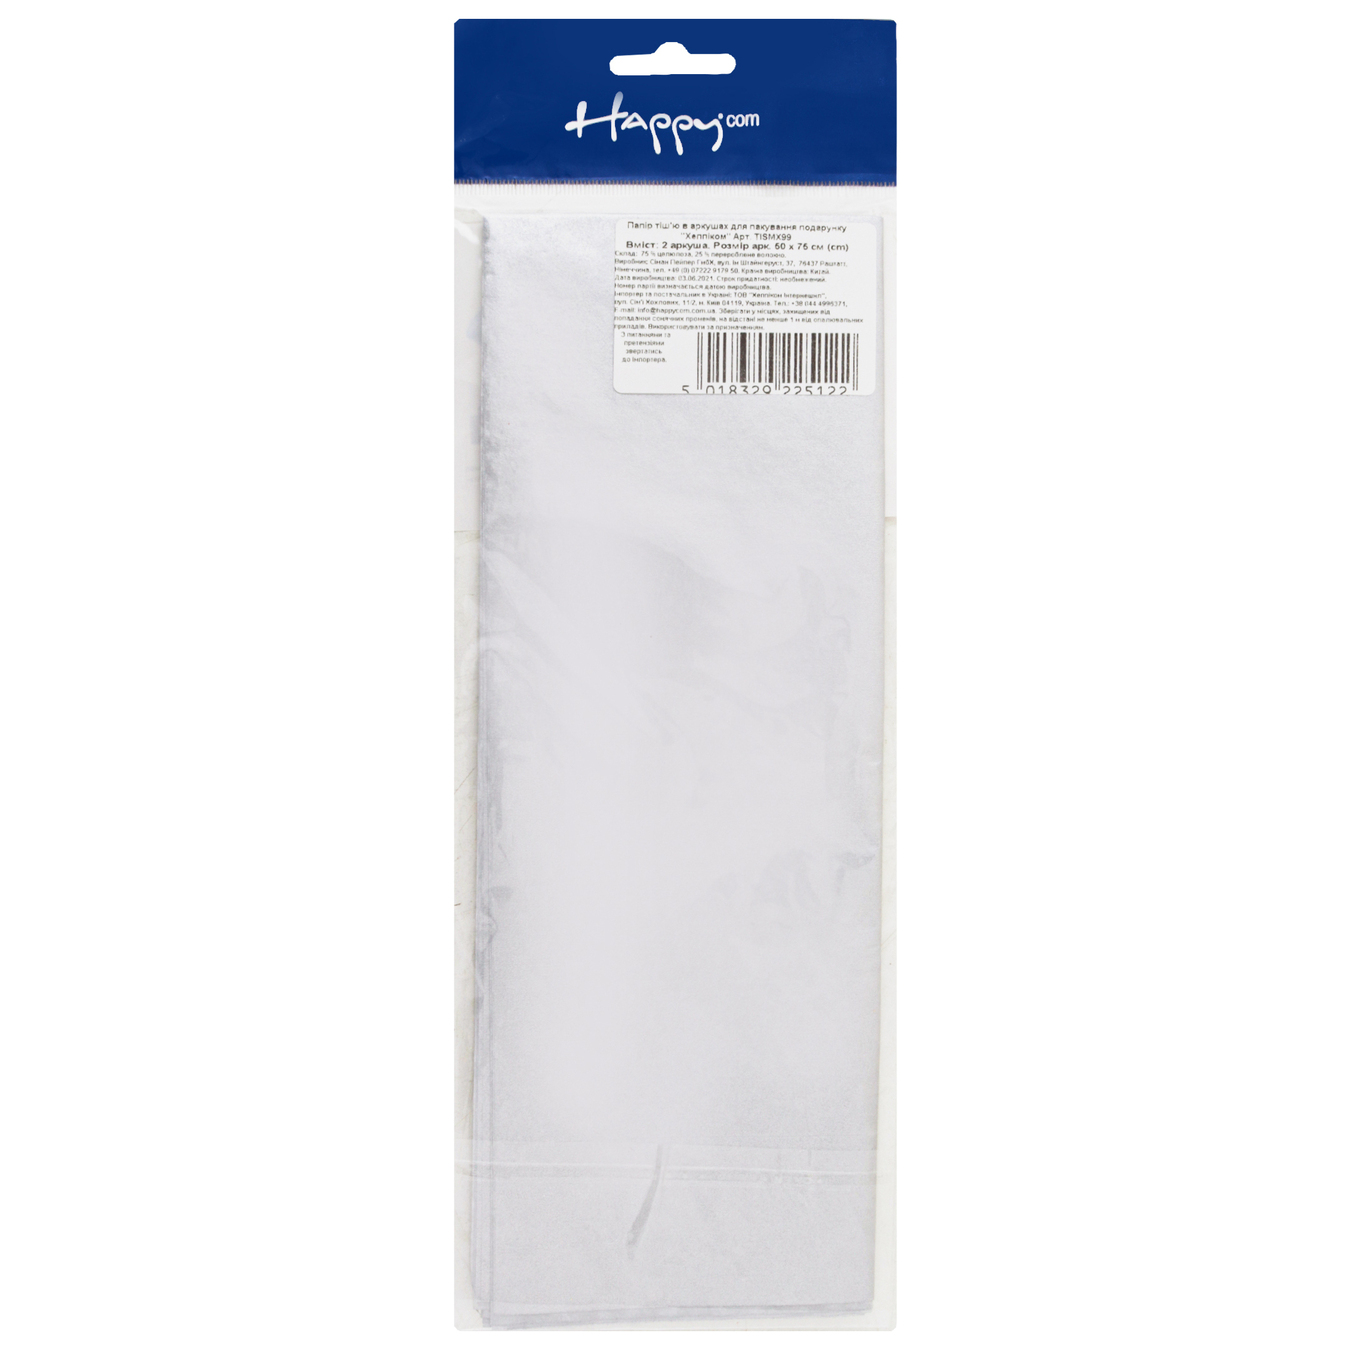 Tissue paper Happycom New Year metallic 2 sheets 50*75 cm 2